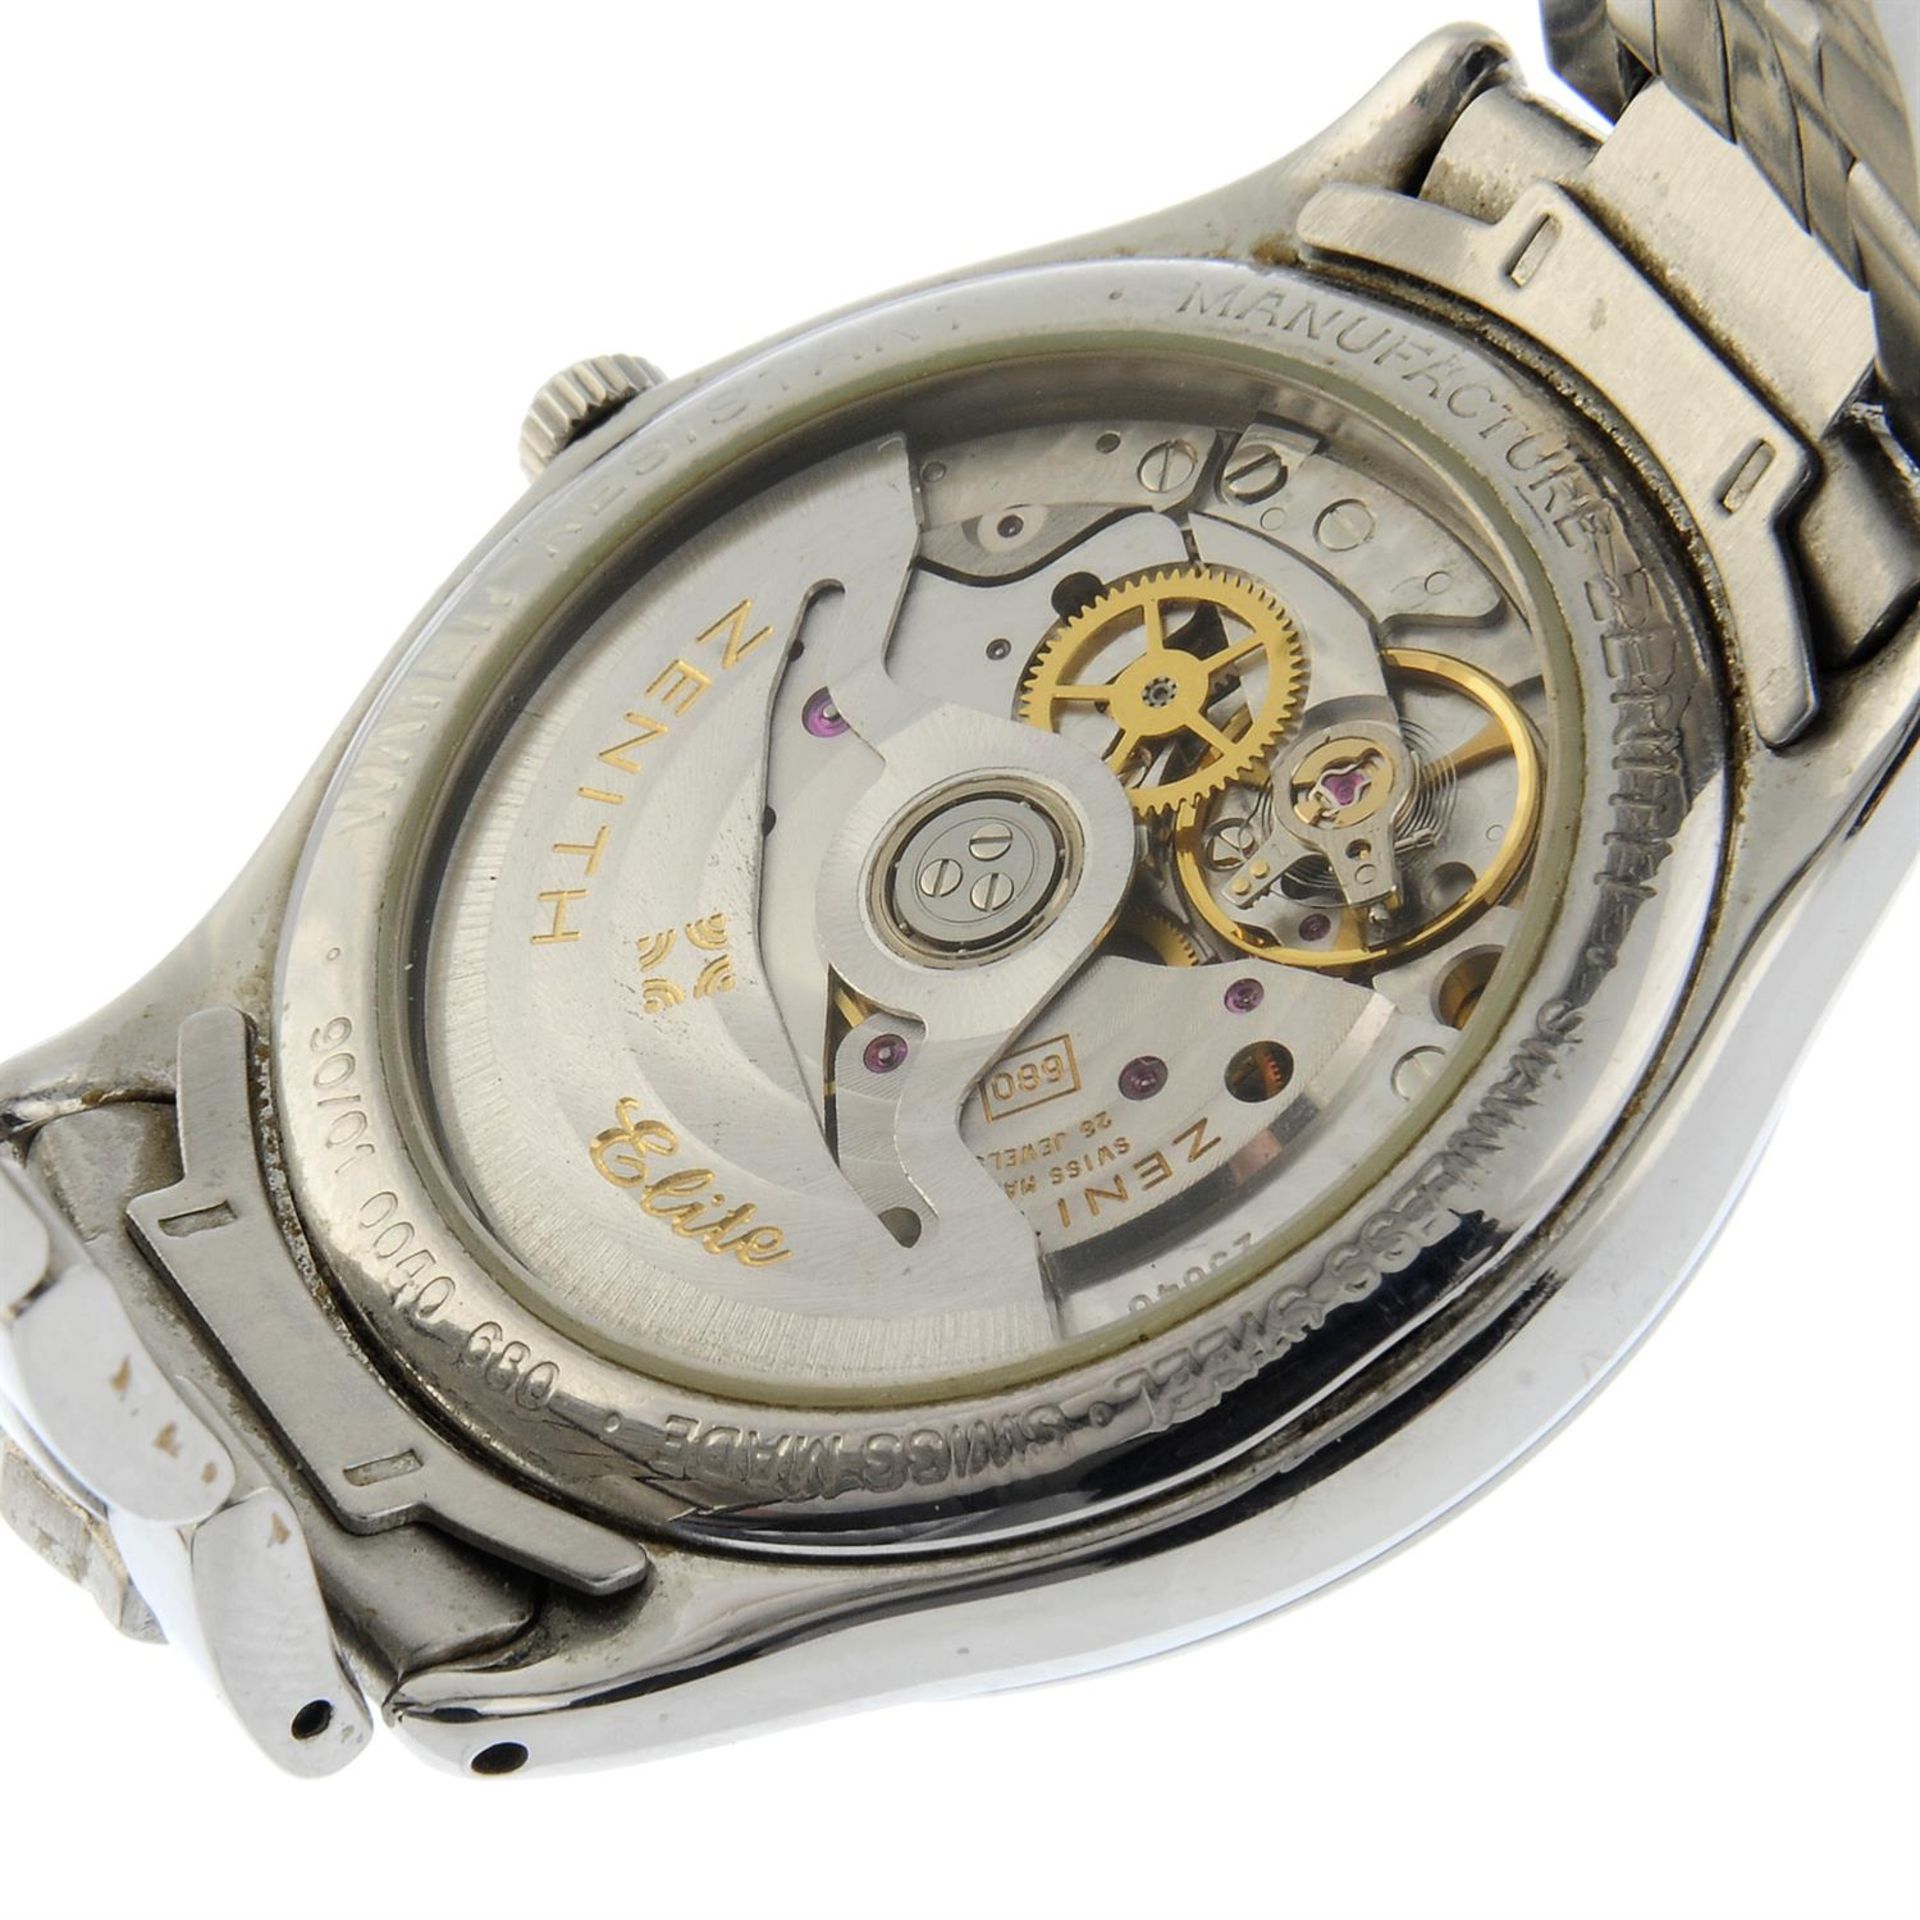 Zenith - an Elite watch, 35mm. - Image 4 of 5